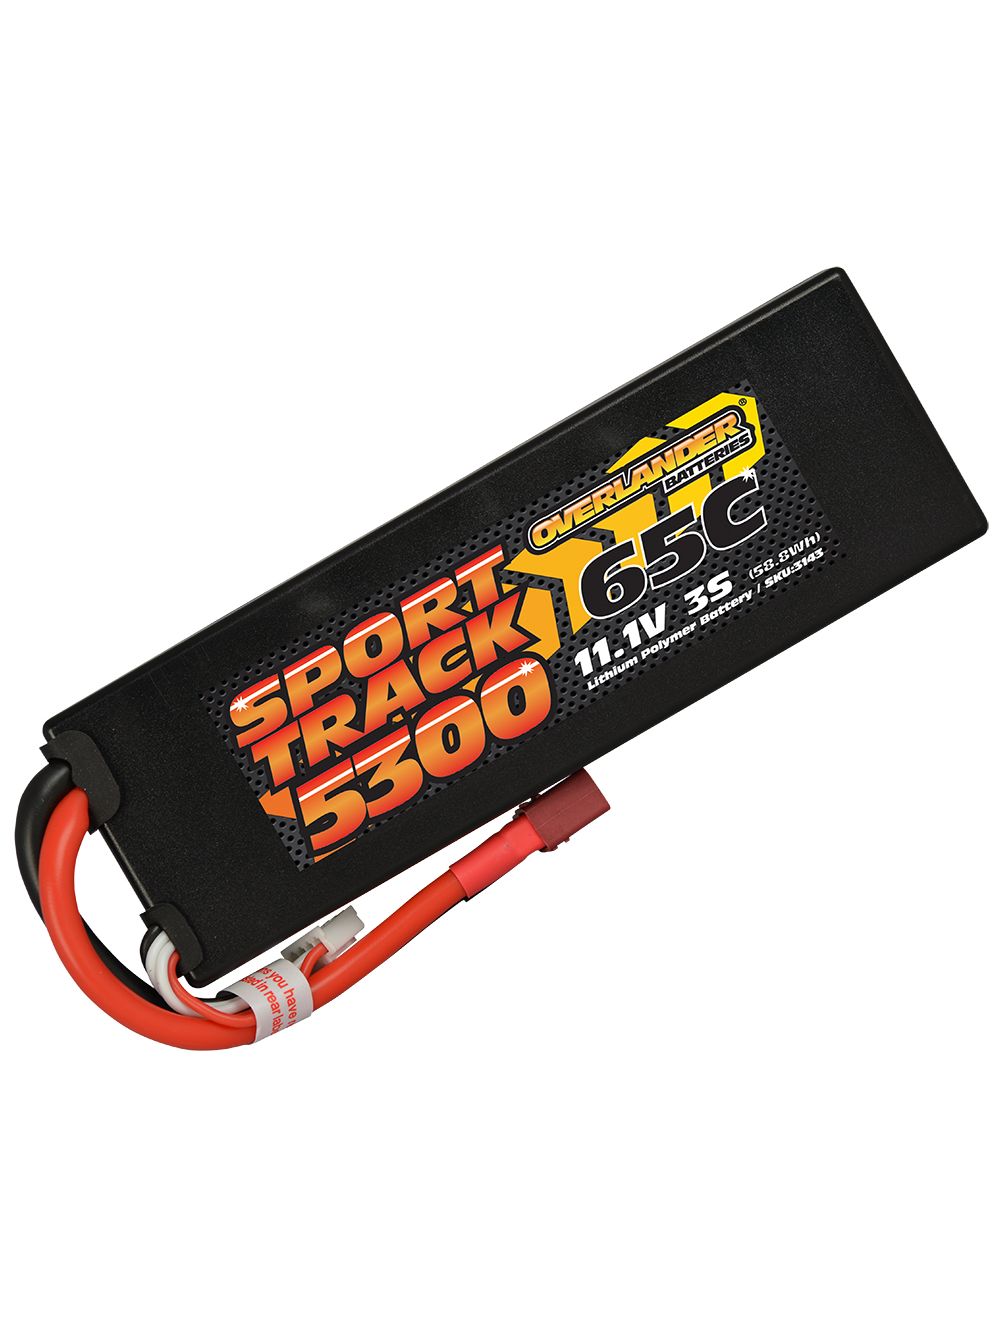 Overlander 5300mAh 11.1V 3S 65C Hard Case Sport Track LiPo Battery - EC5 Connector 3143